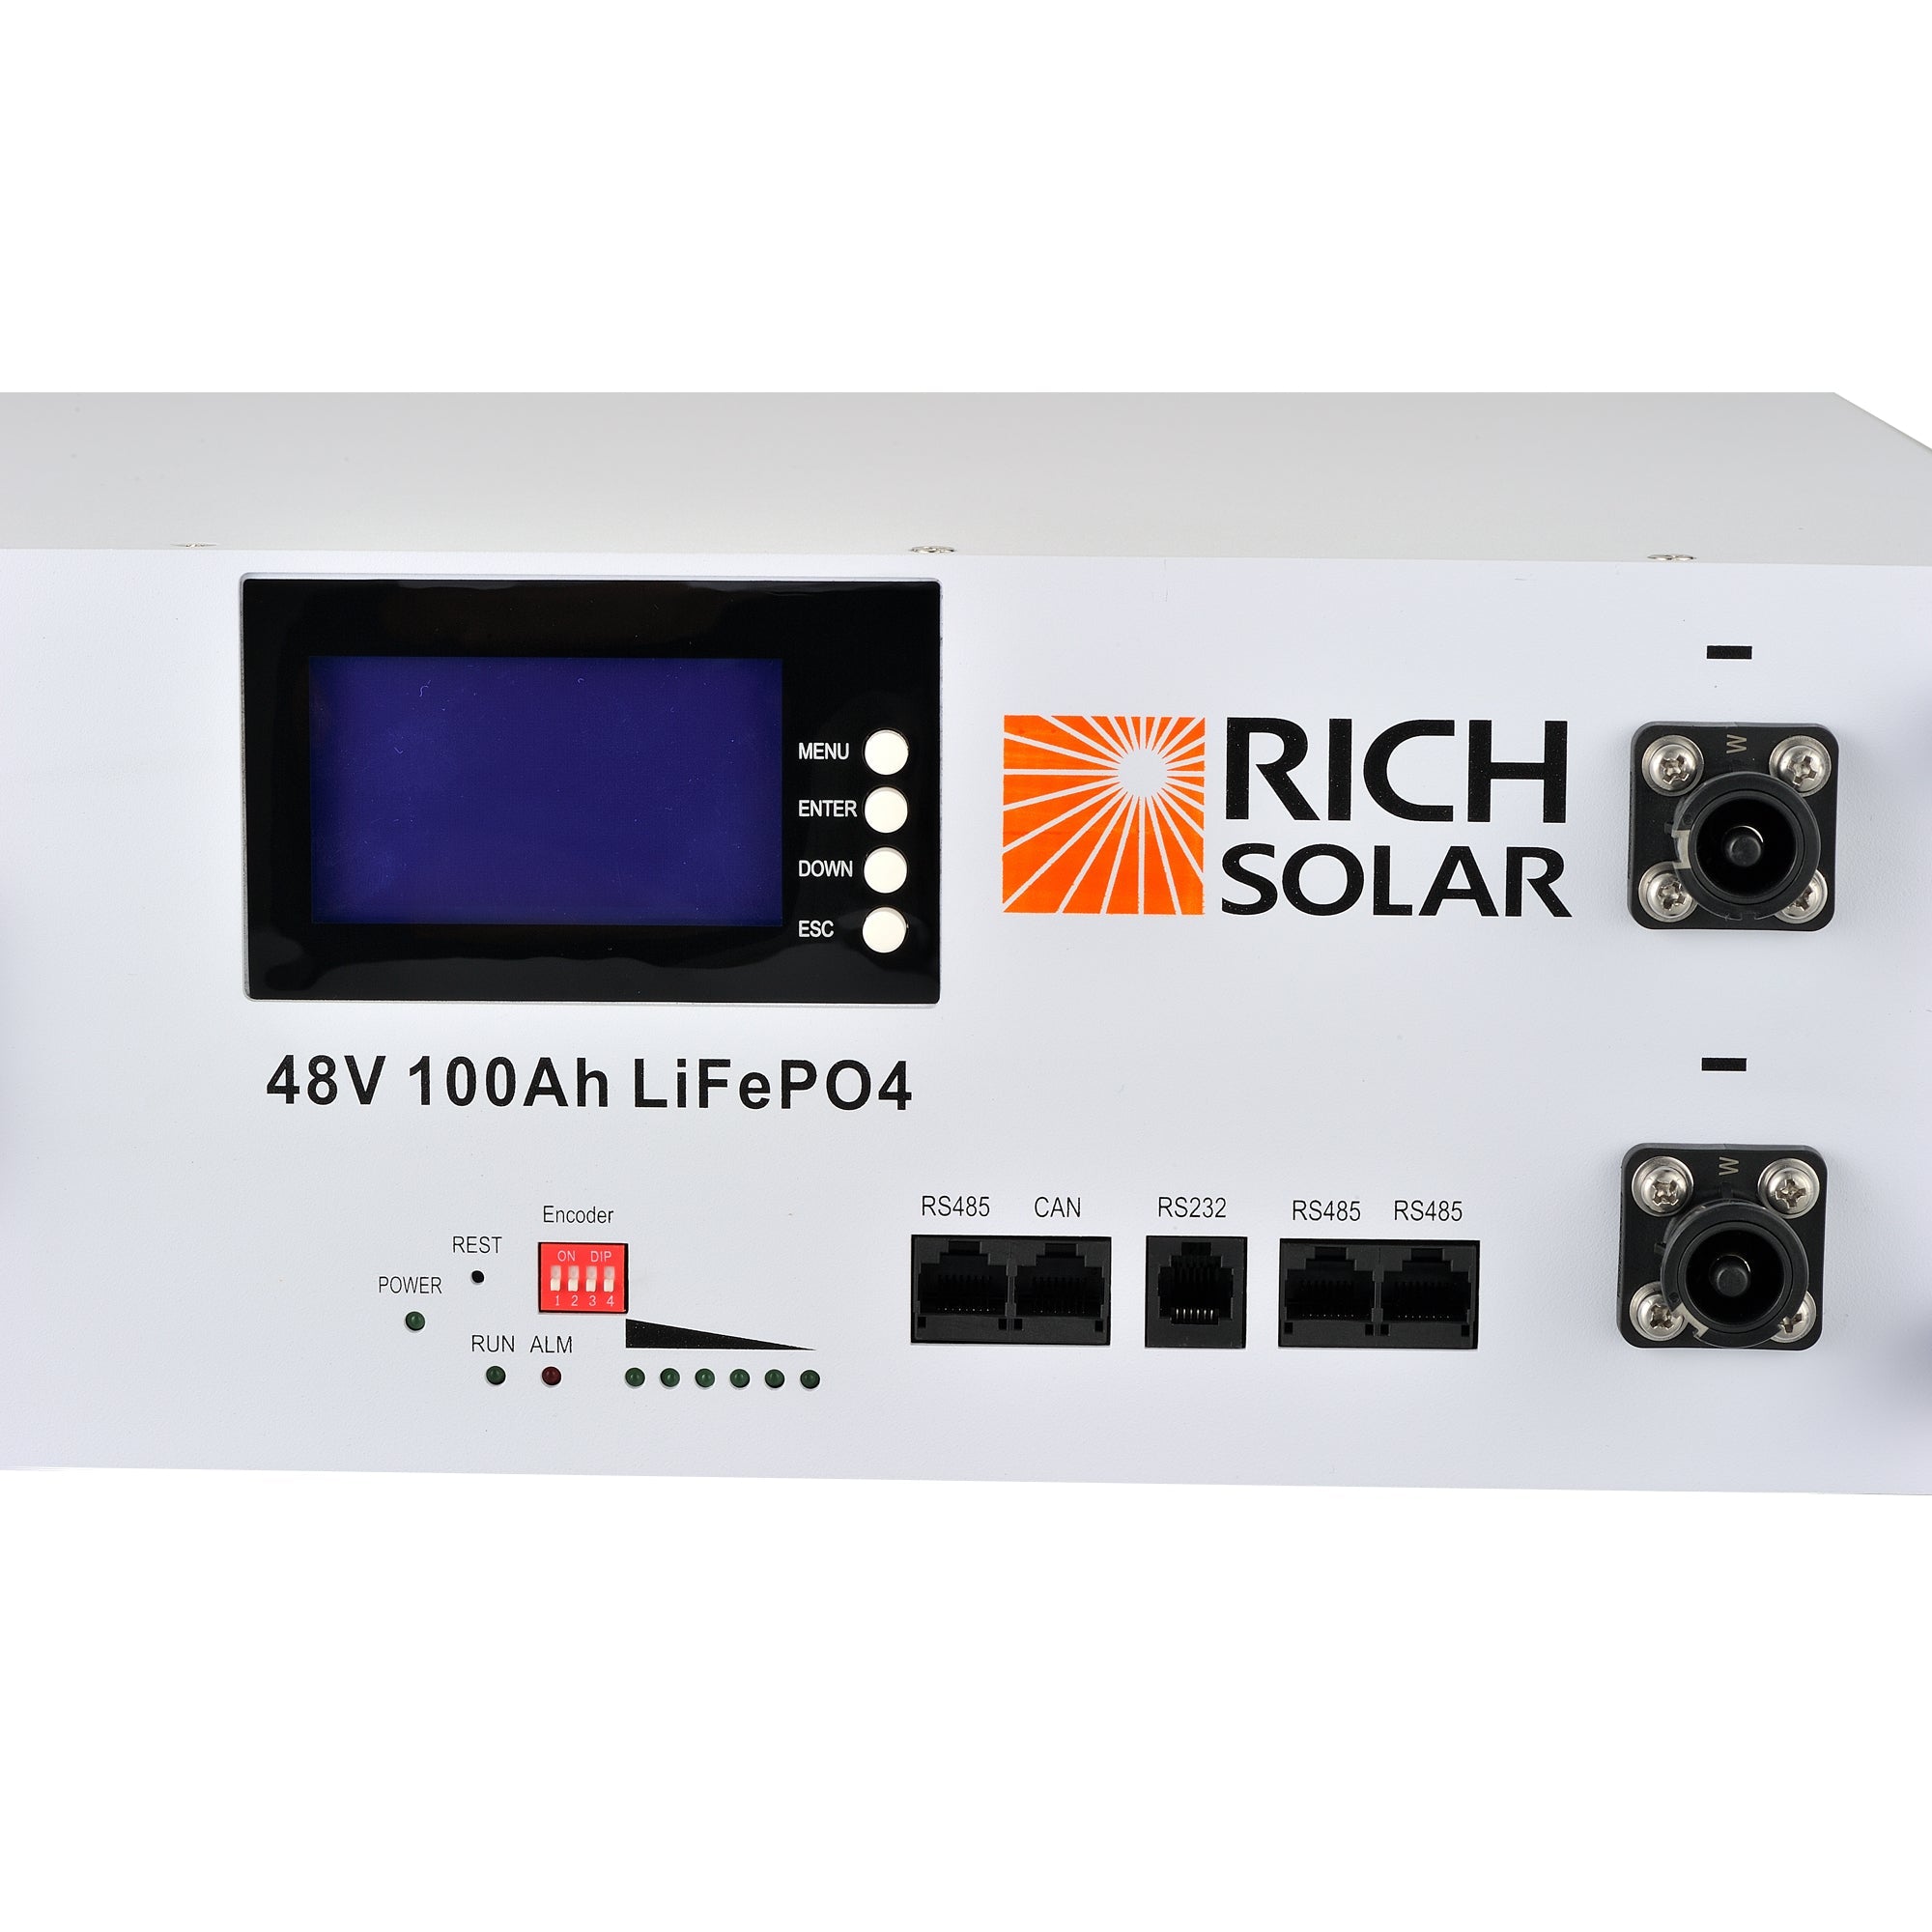 Rich Solar 12V 100Ah LiFePO4 Lithium Iron Phosphate Battery | 10-Year  Warranty